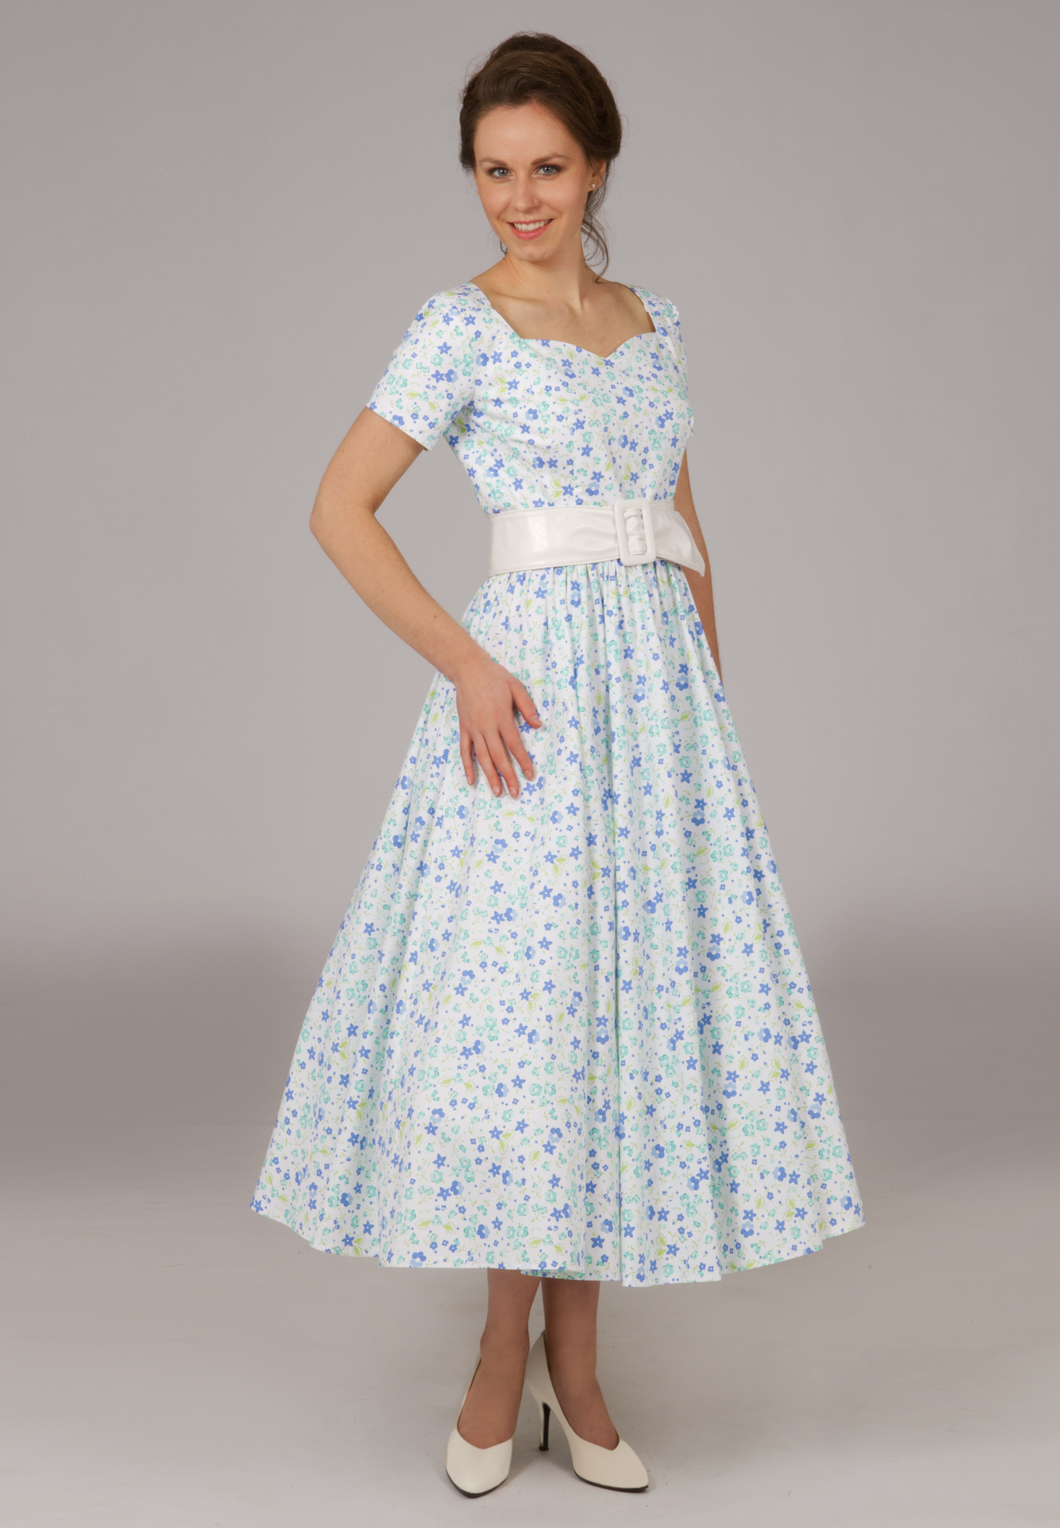 Vivien Retro 50's Dress | Recollections